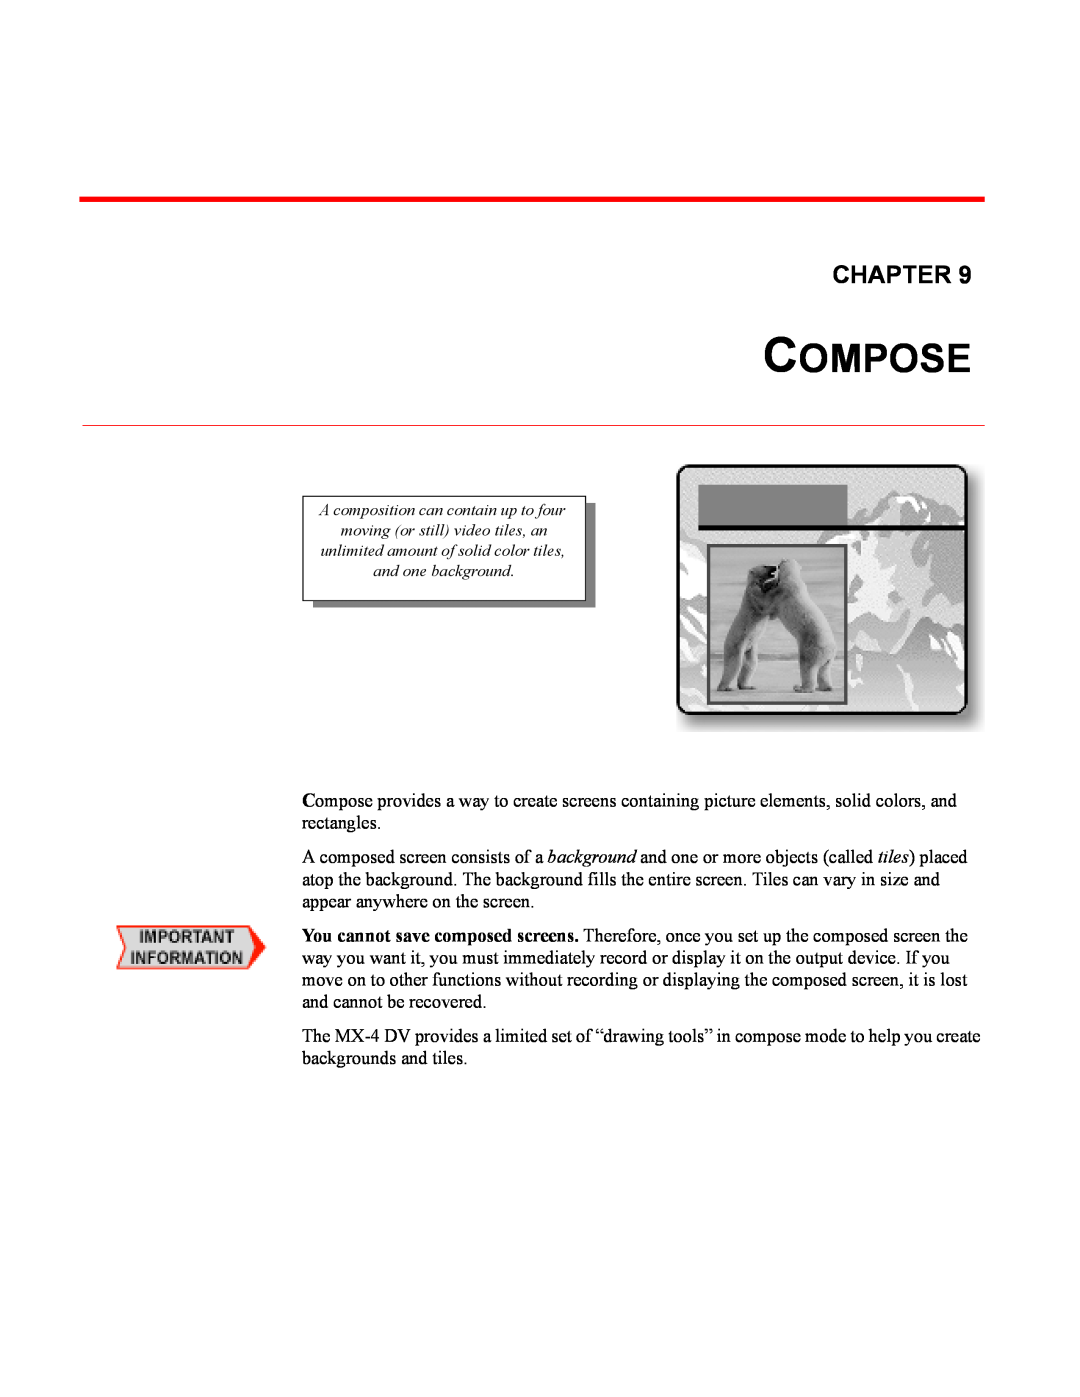 FOCUS Enhancements MX-4DV manual Compose, Chapter 